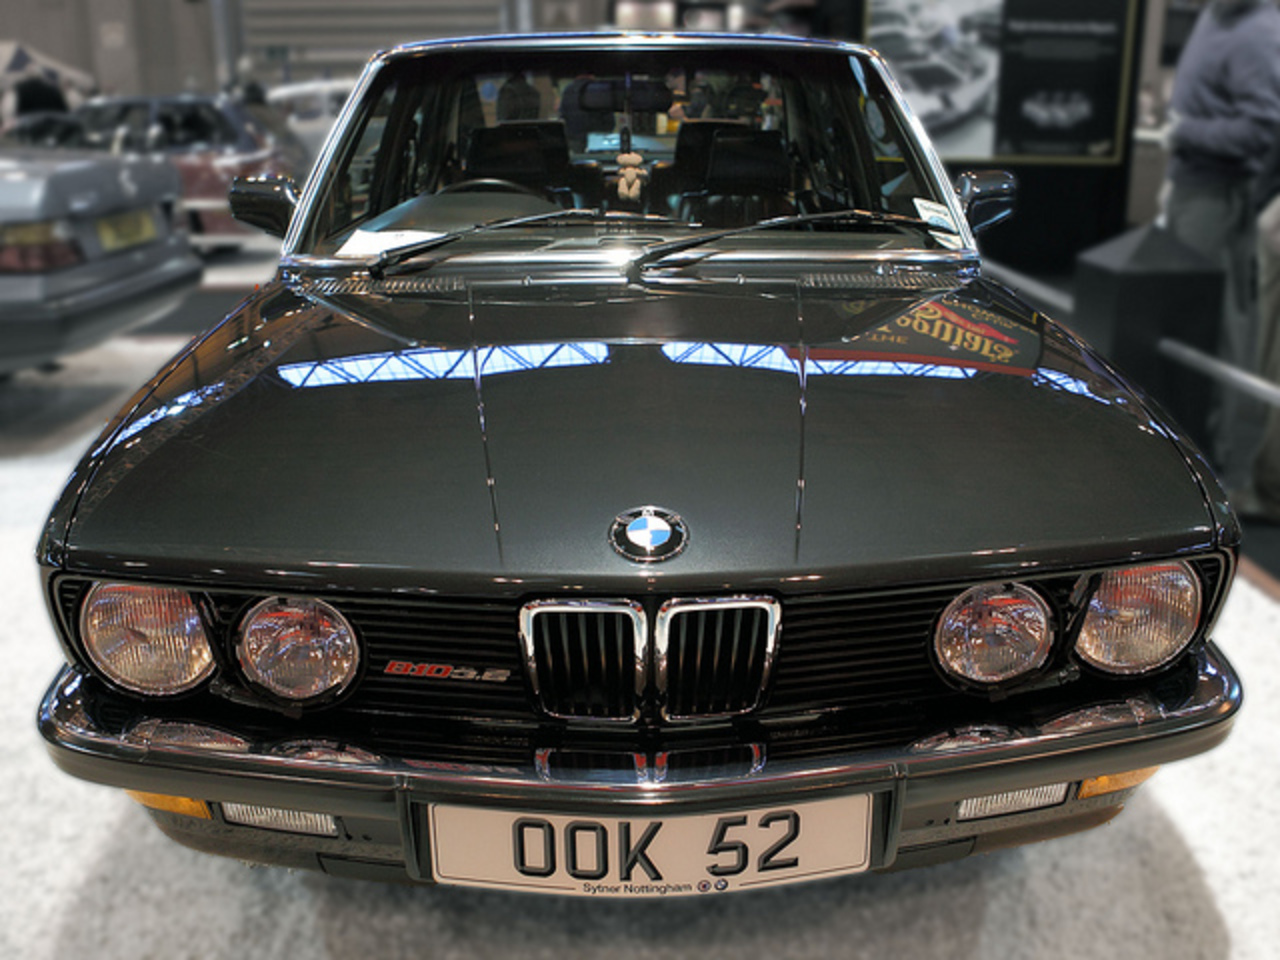 BMW (E28) Alpina B10 3.6, front detail, c1987 | Flickr - Photo ...